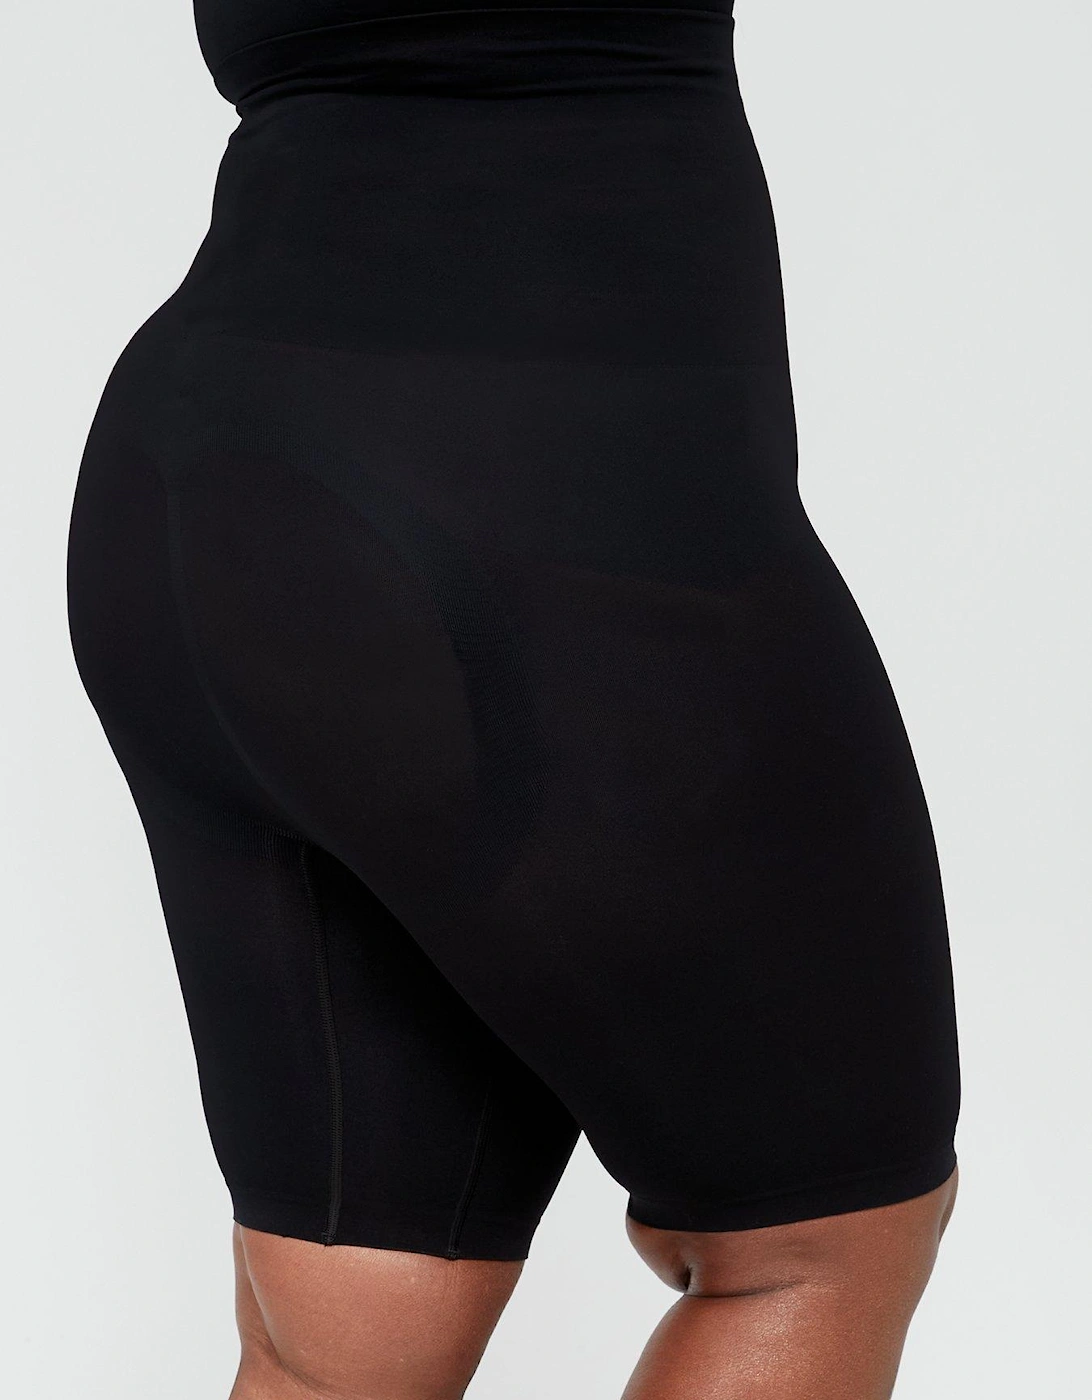 Shape Enhancing Seamless Mid Thigh Short - Black